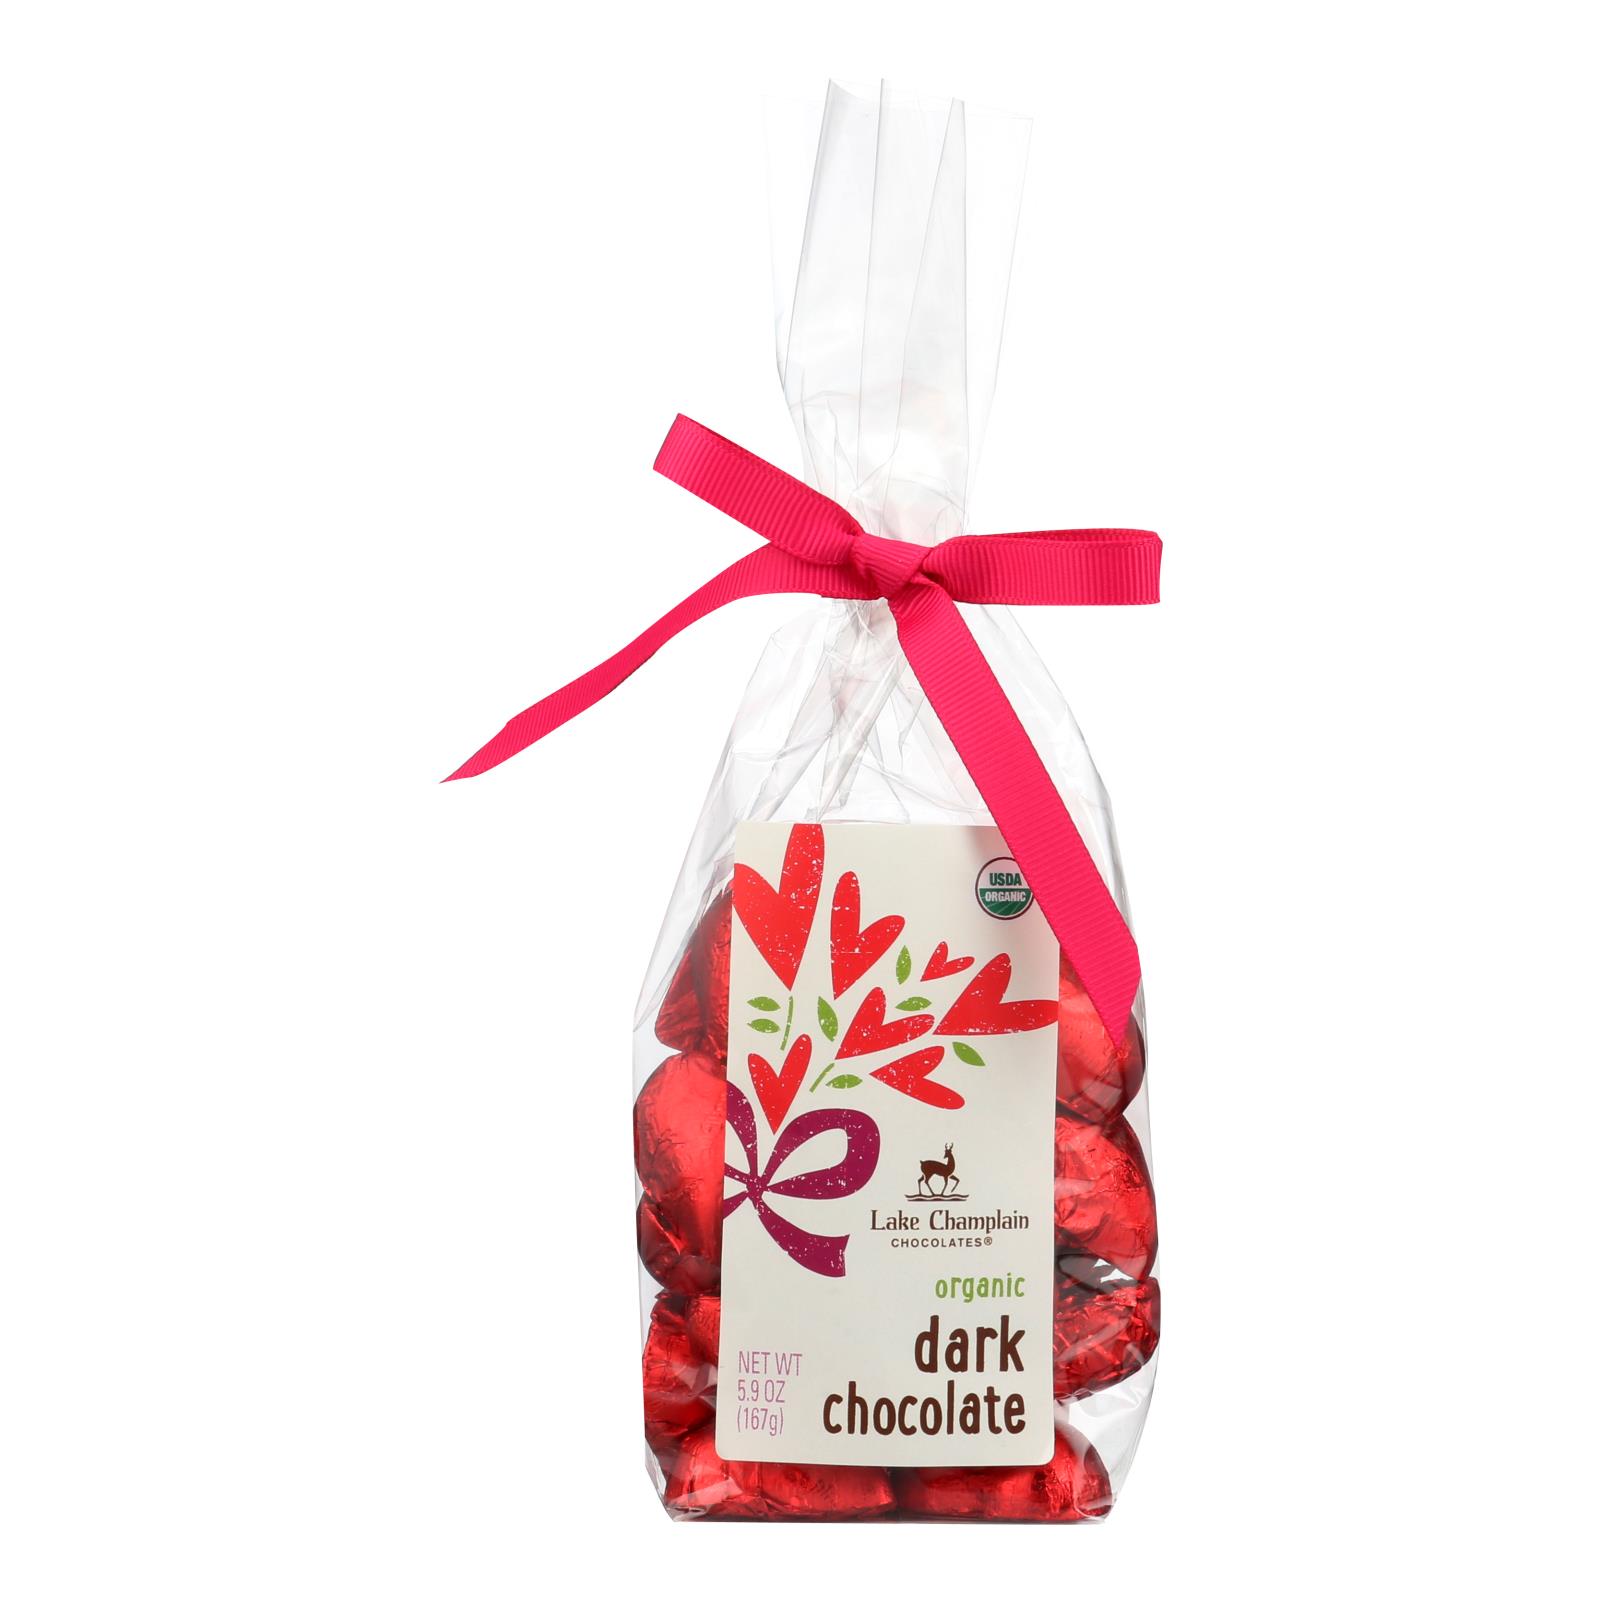 Lake Champion Chocolates Organic Dark Chocolate - 12개 묶음상품 - 5.9 OZ